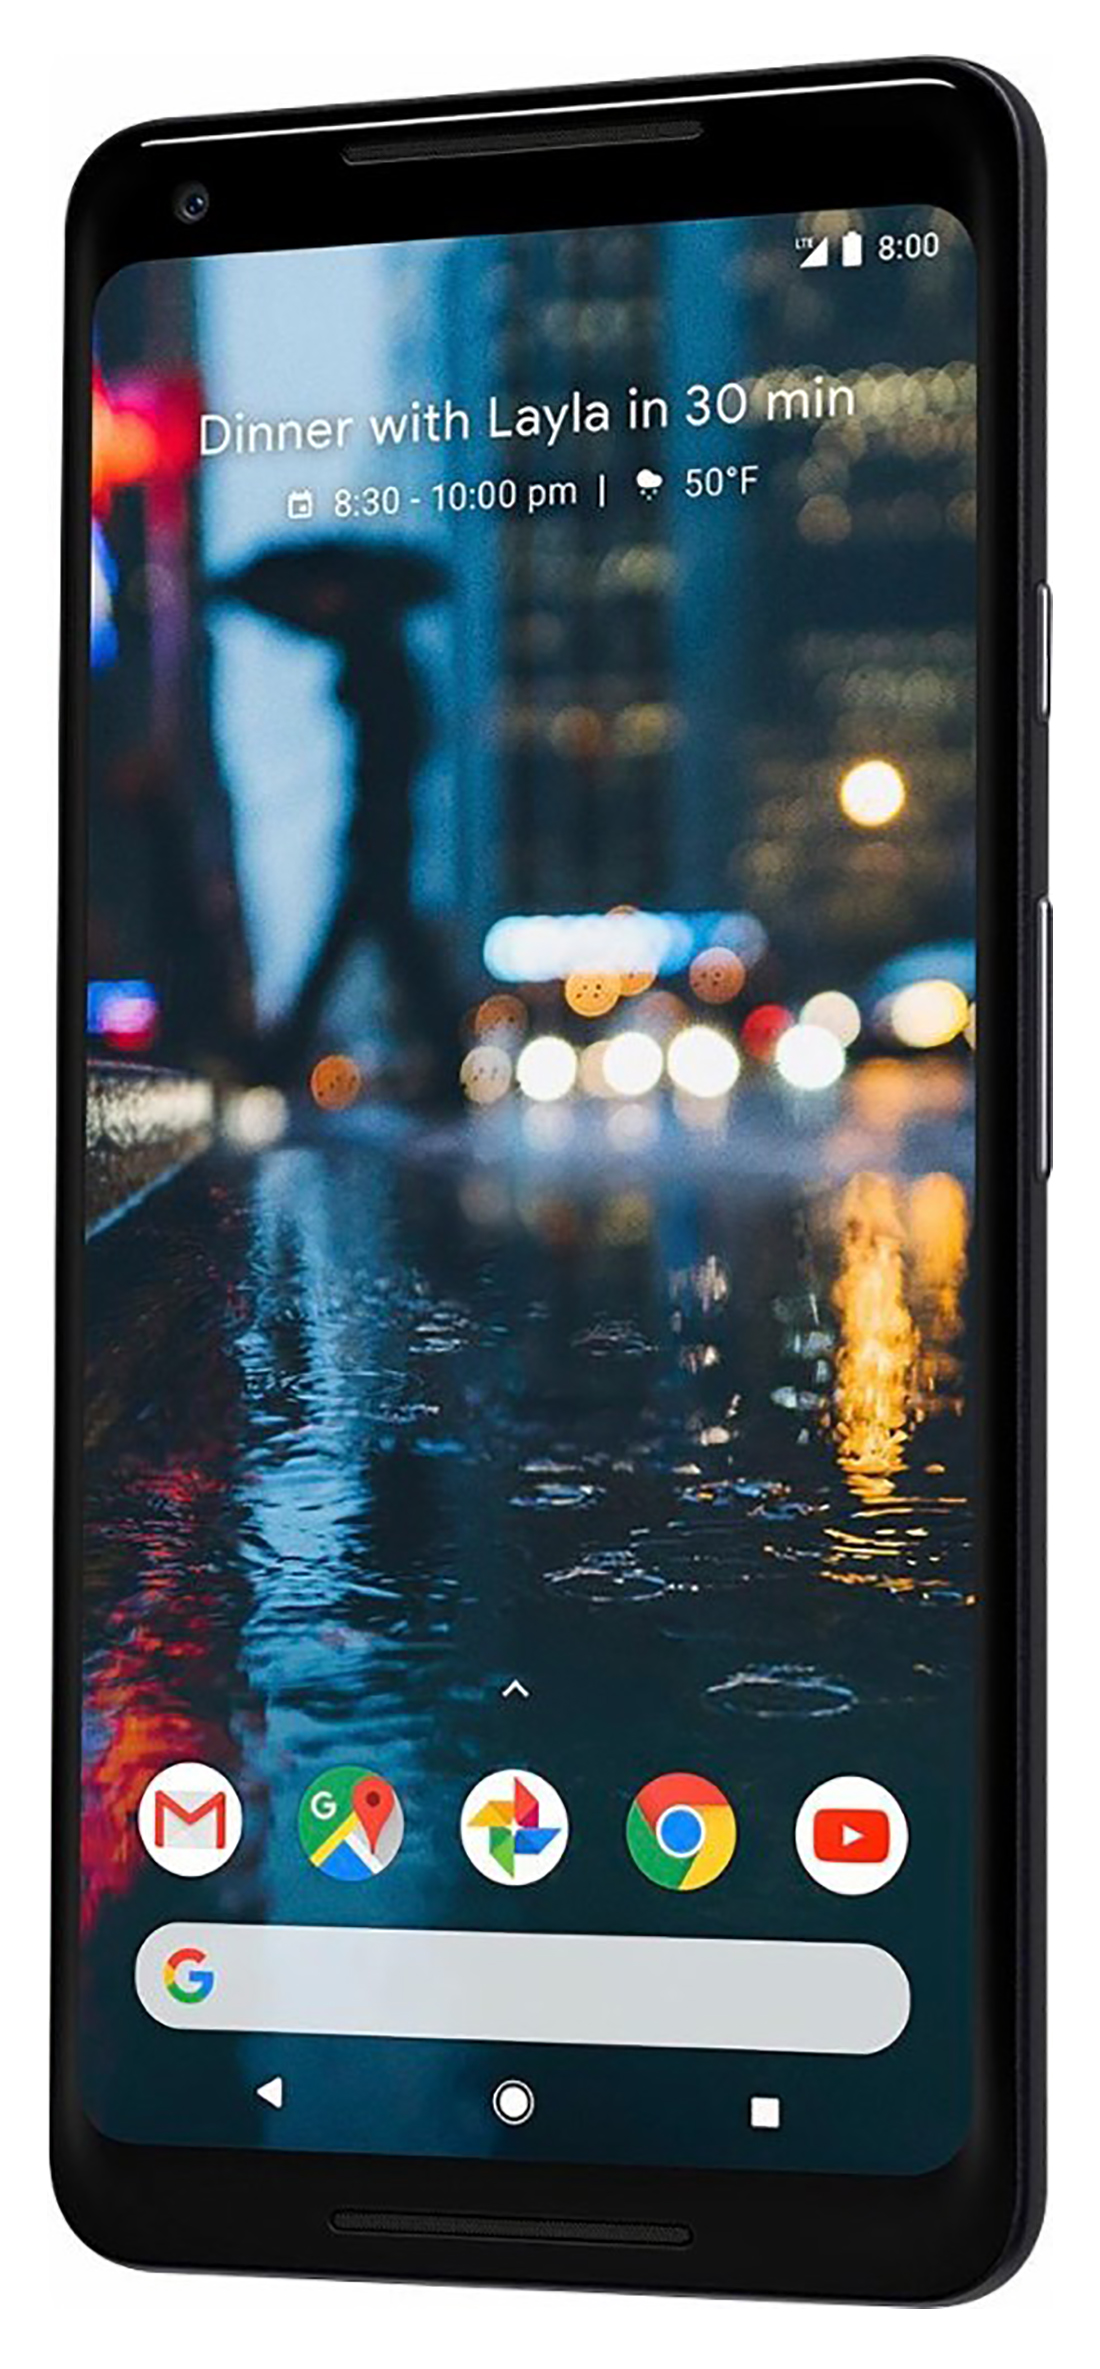 Google Pixel 2 XL 64GB Unlocked GSM/CDMA 4G LTE Octa-Core Phone w/ 12.2MP Camera - Just Black - image 3 of 4